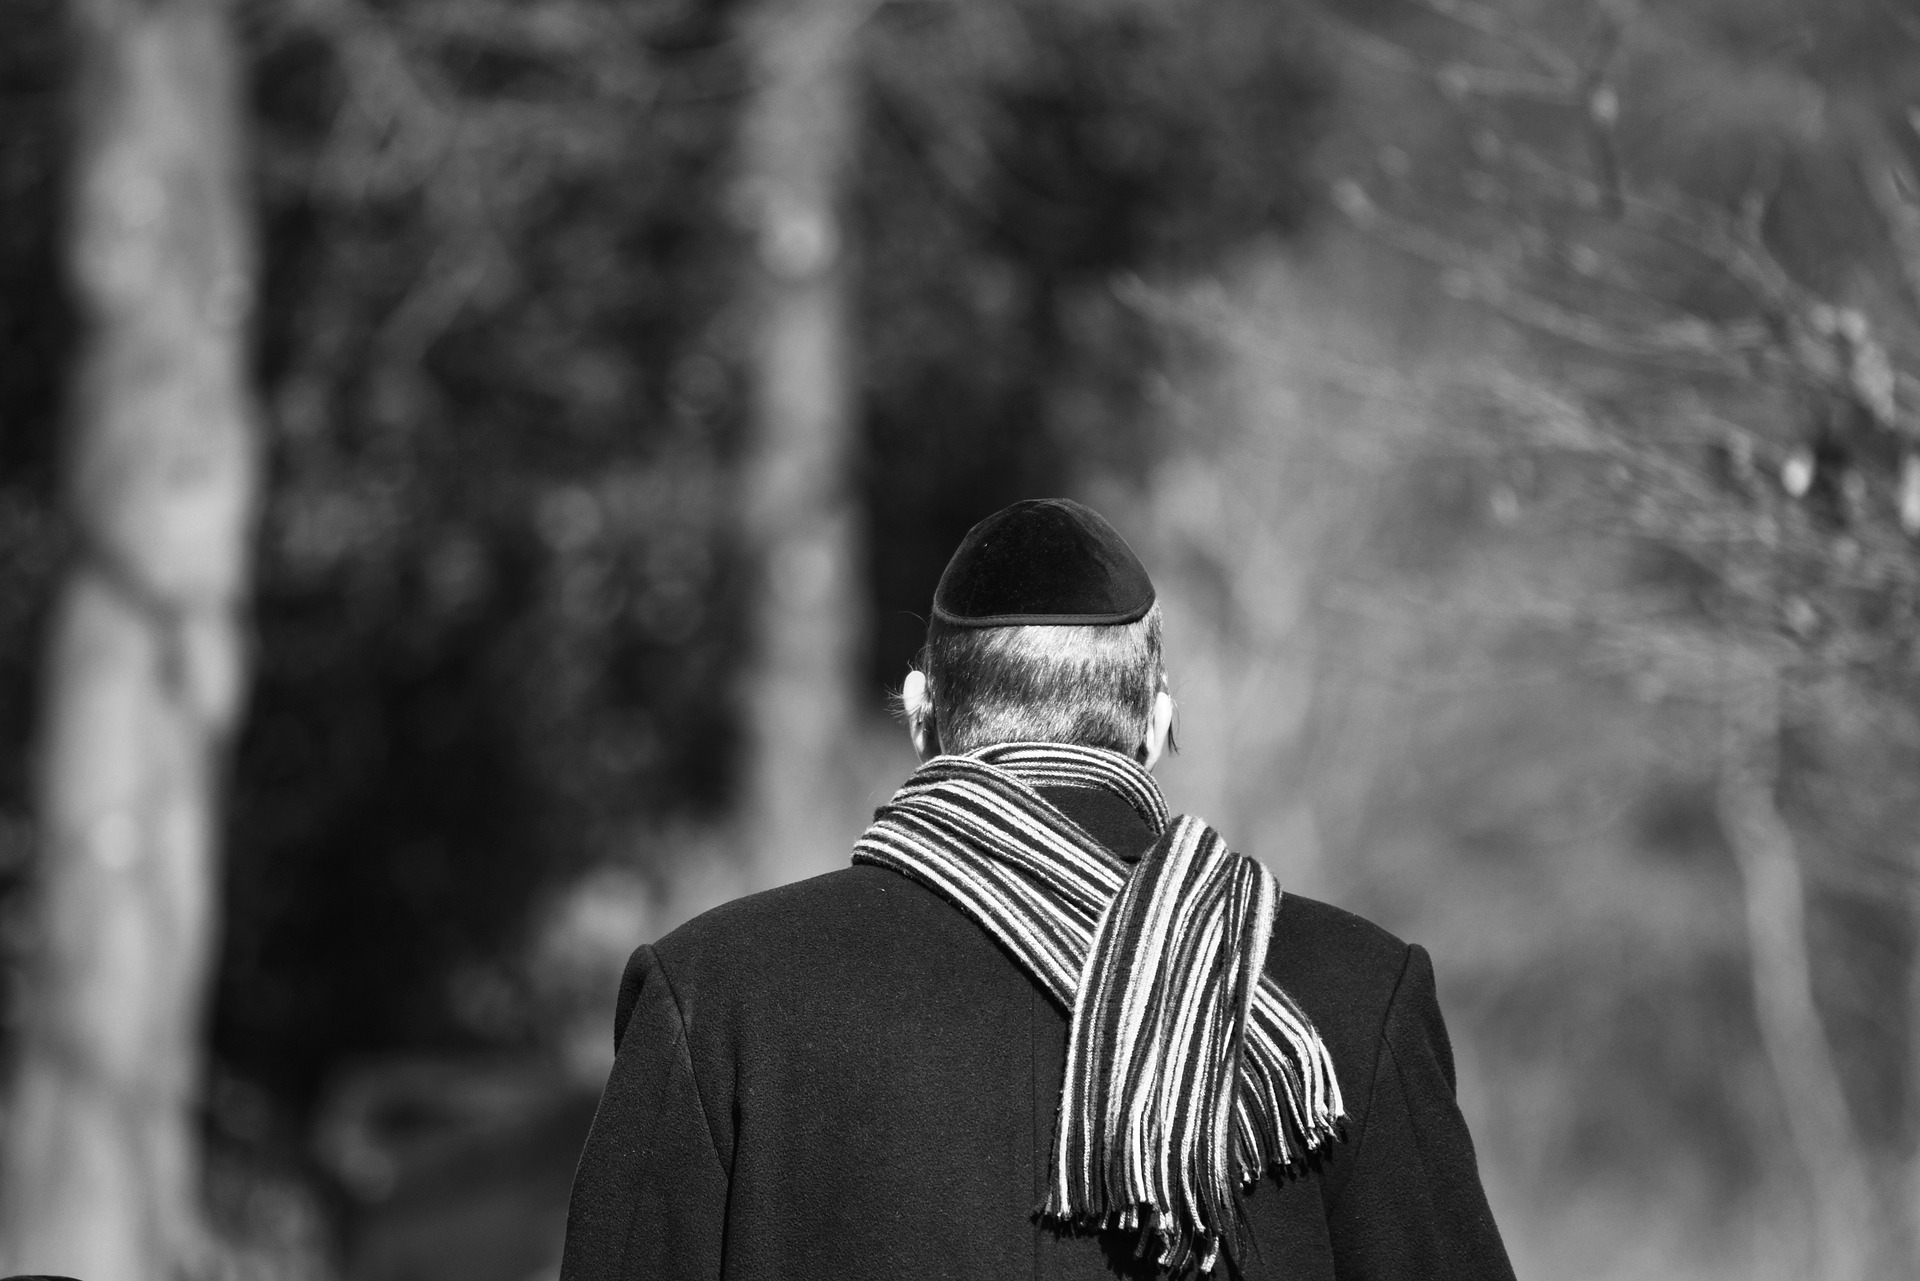 Strengthening Jewish communities in Judea and Samaria